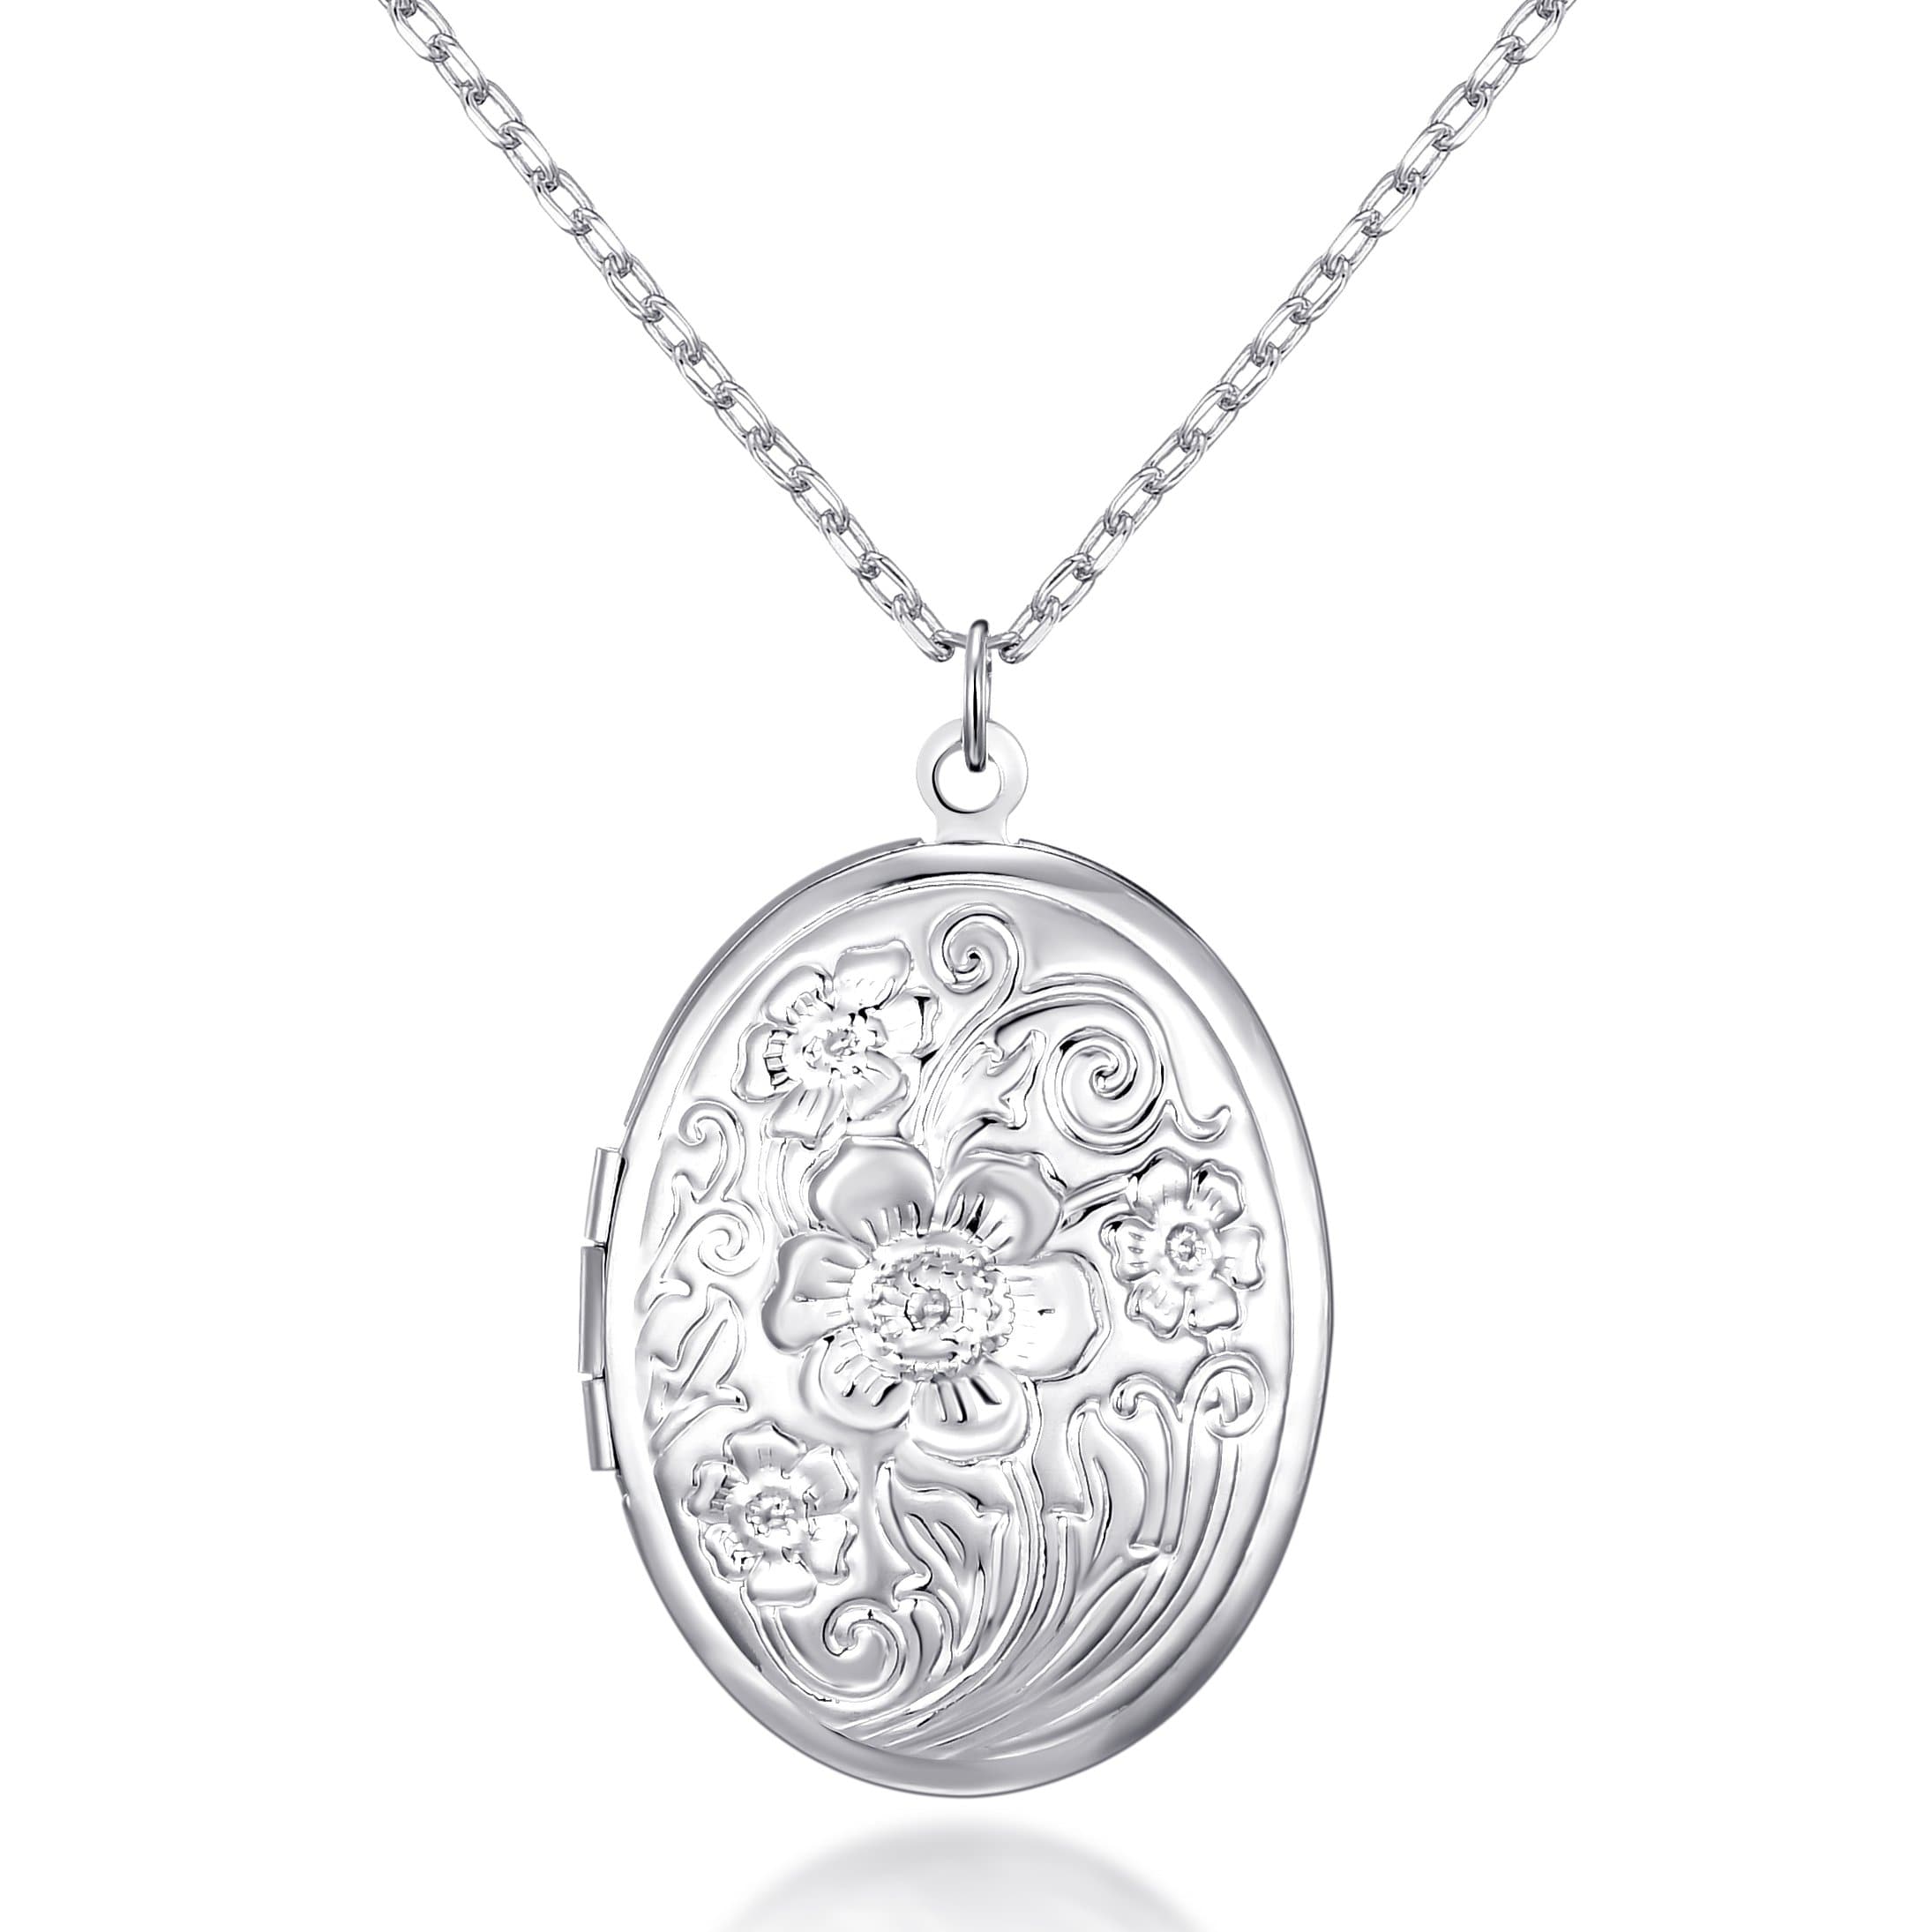 Silver Plated Oval Locket by Philip Jones Jewellery